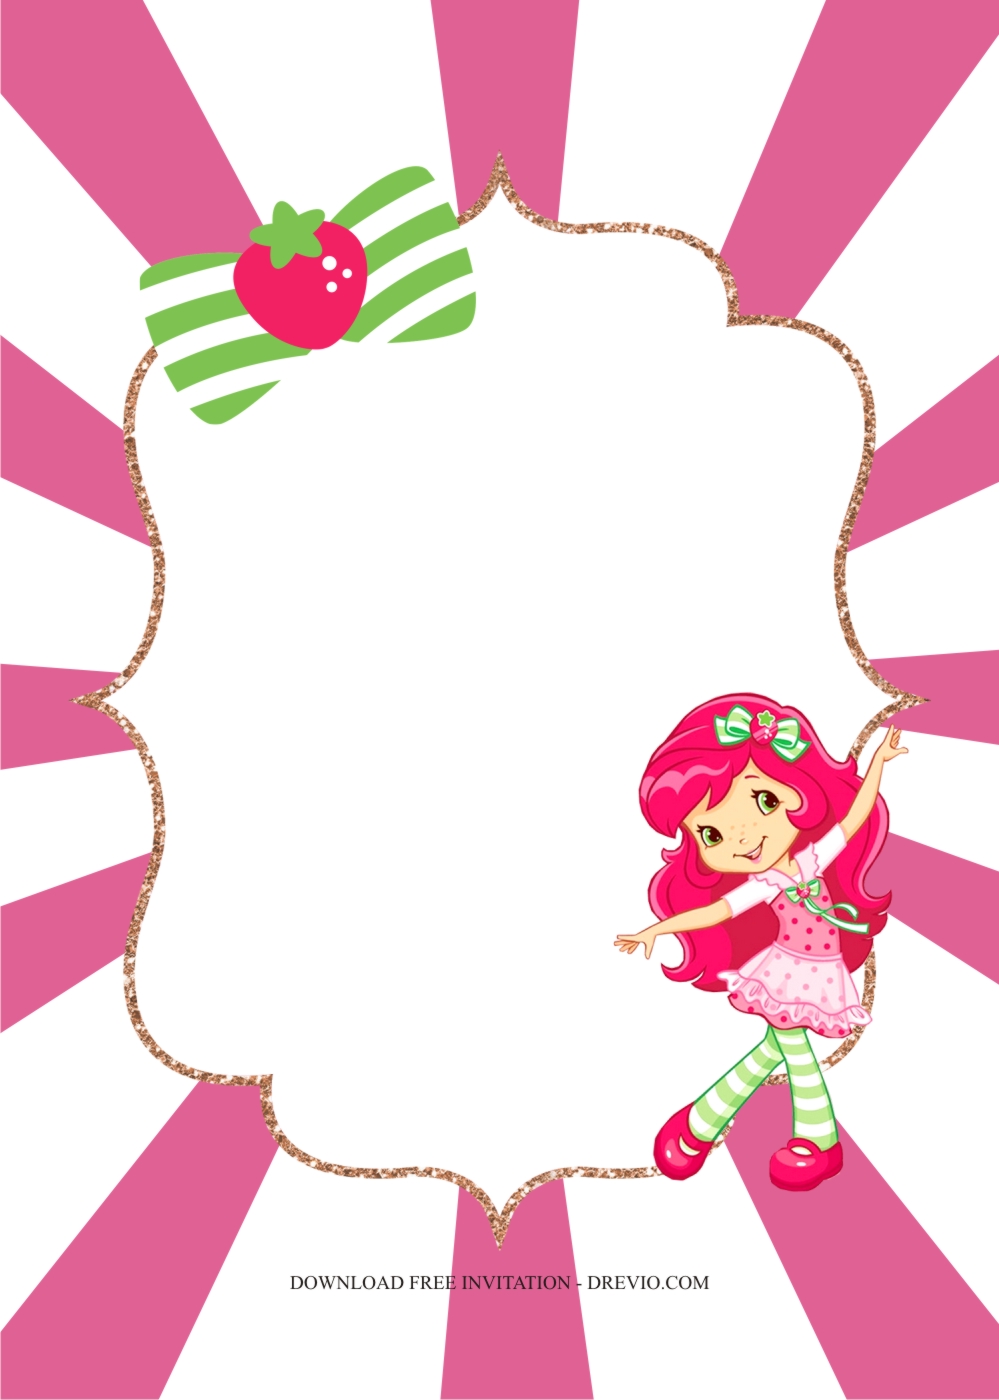 strawberry-shortcake-birthday-invitation-template12-download-hundreds